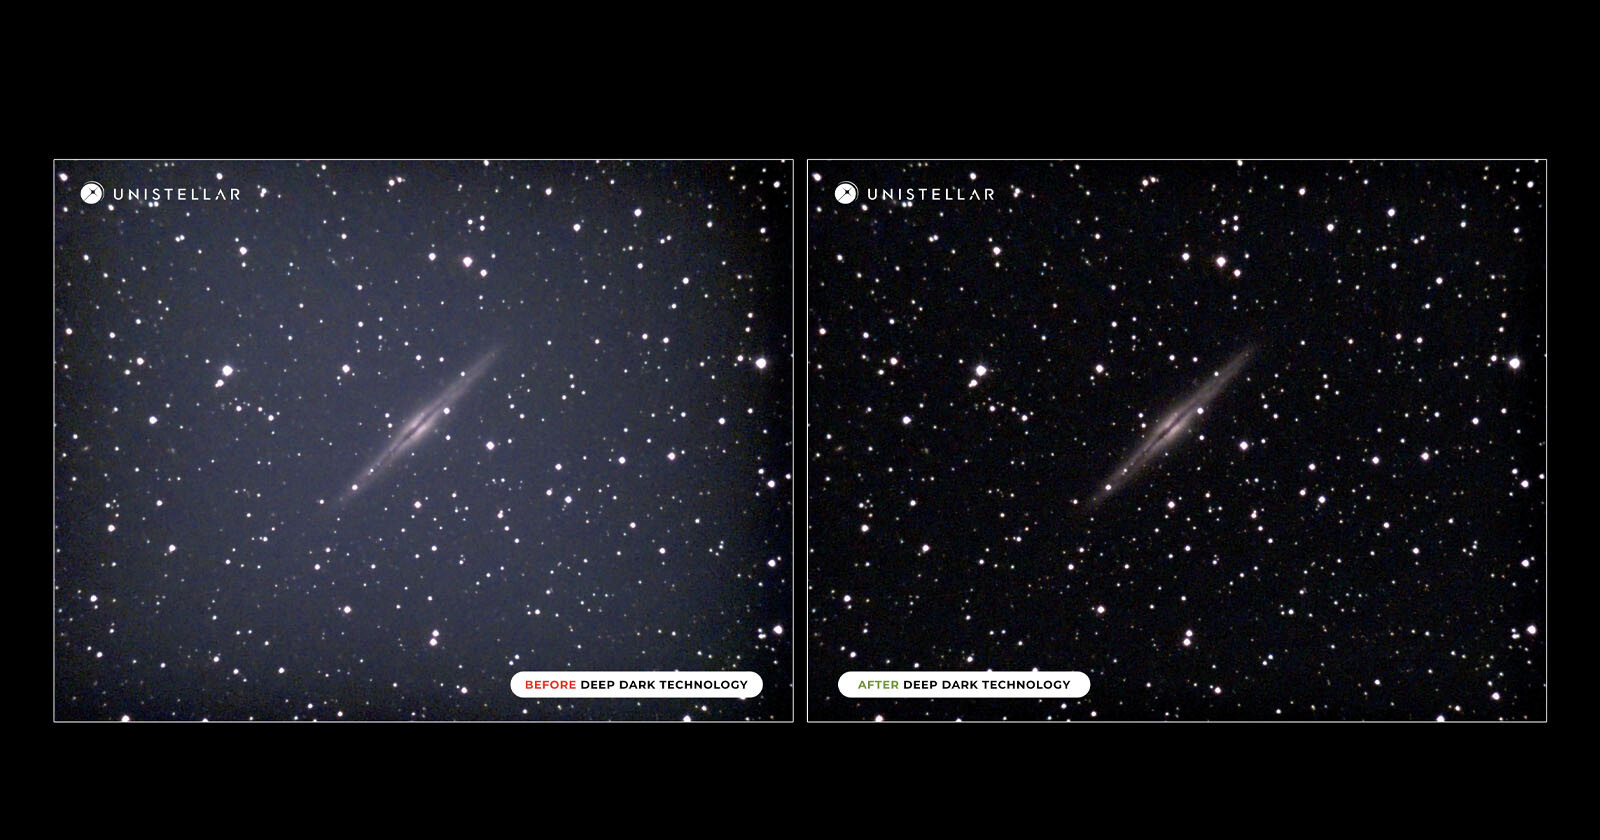  unistellar says its astro photo tech totally 